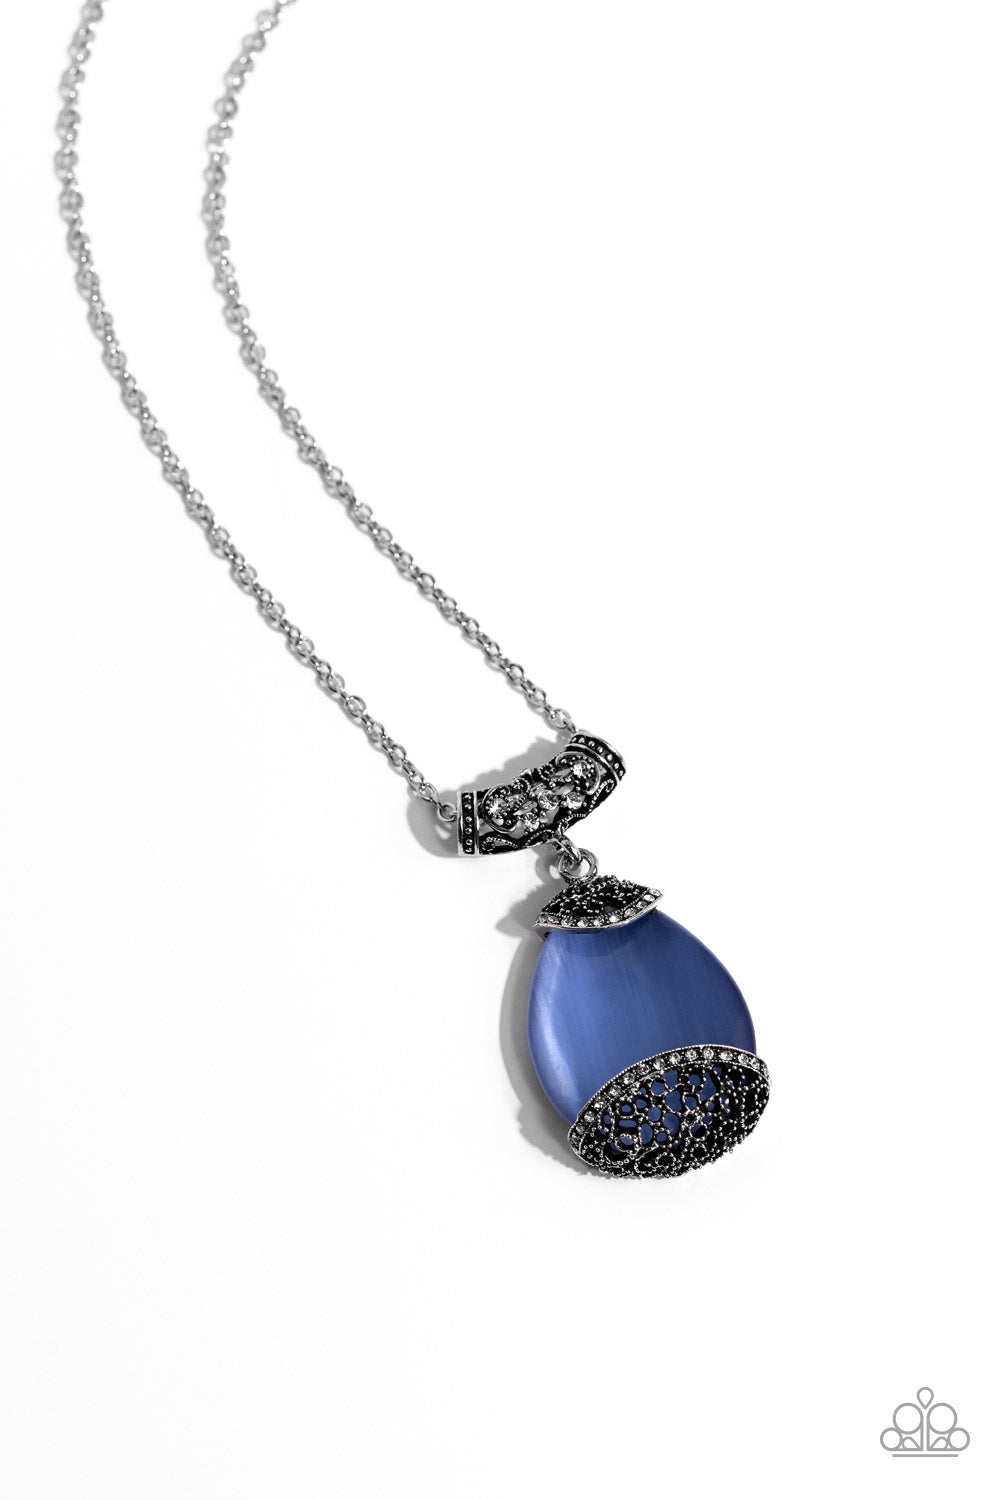 Hypnotic Headliner Blue Cat's Eye Stone Necklace - Paparazzi Accessories- lightbox - CarasShop.com - $5 Jewelry by Cara Jewels